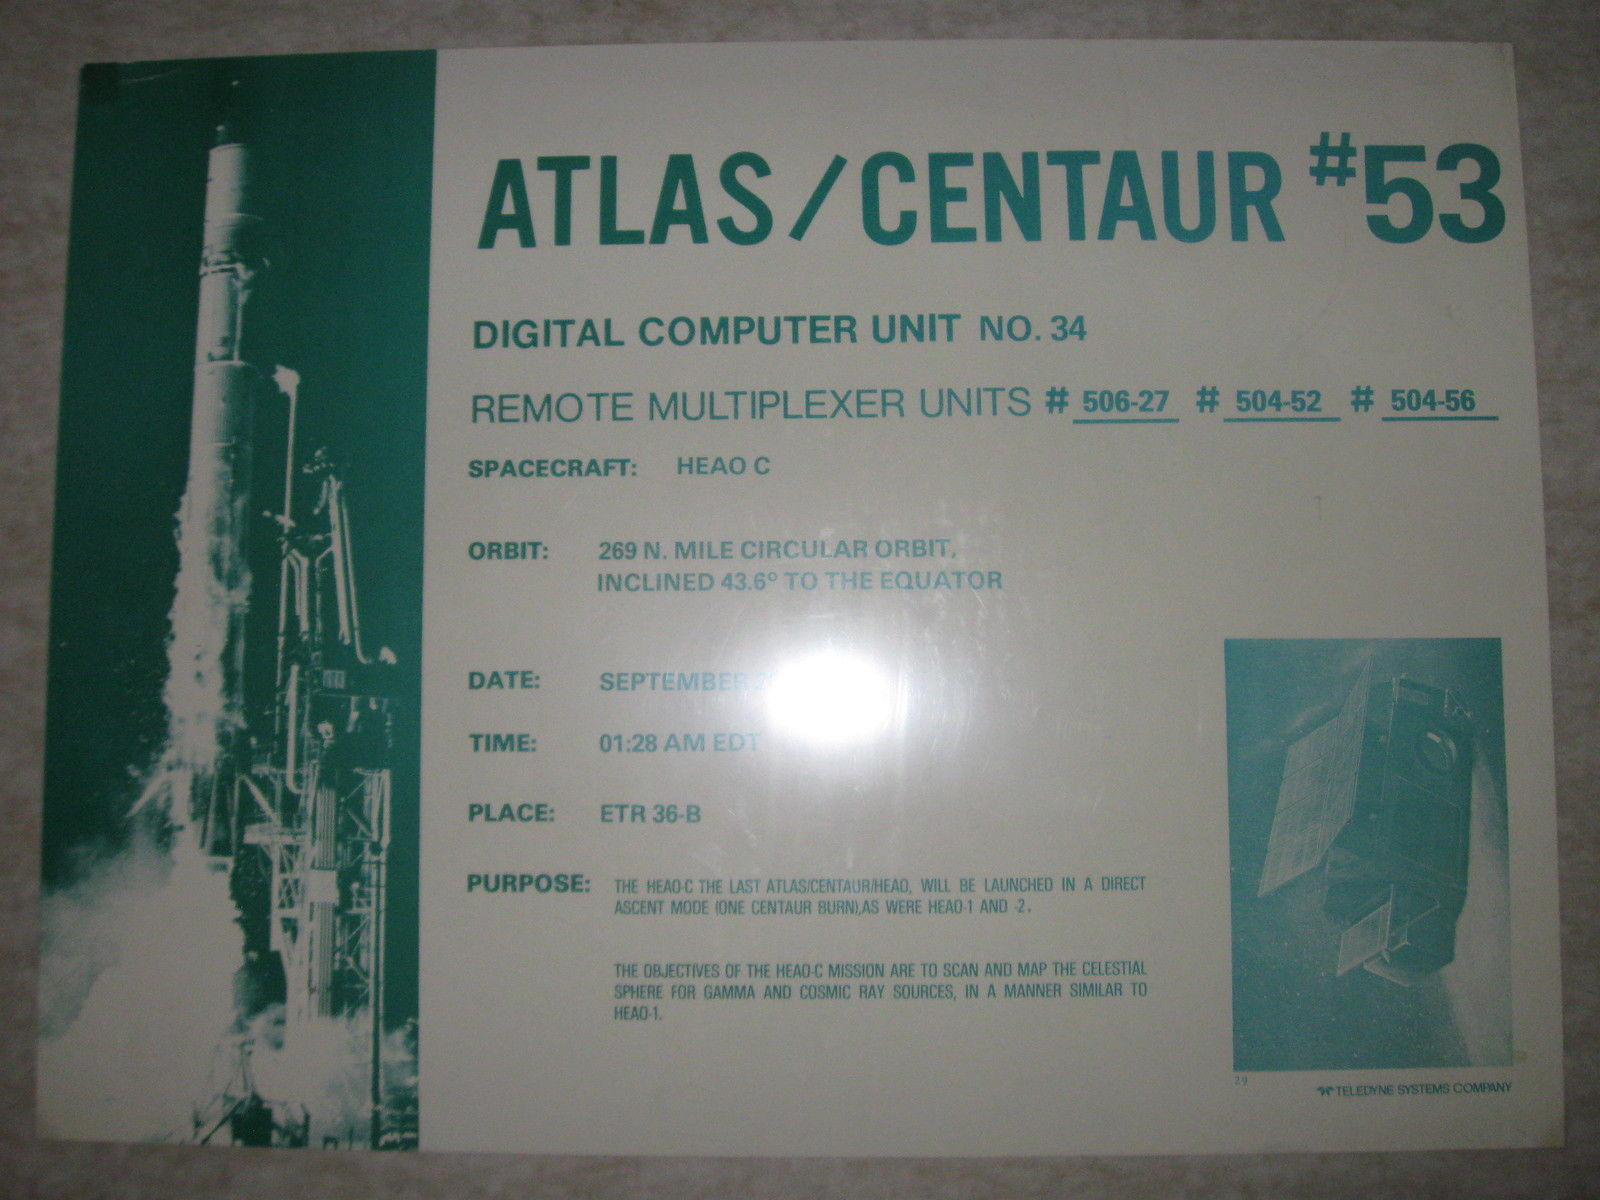 Atlas / Centaur #53 launch poster